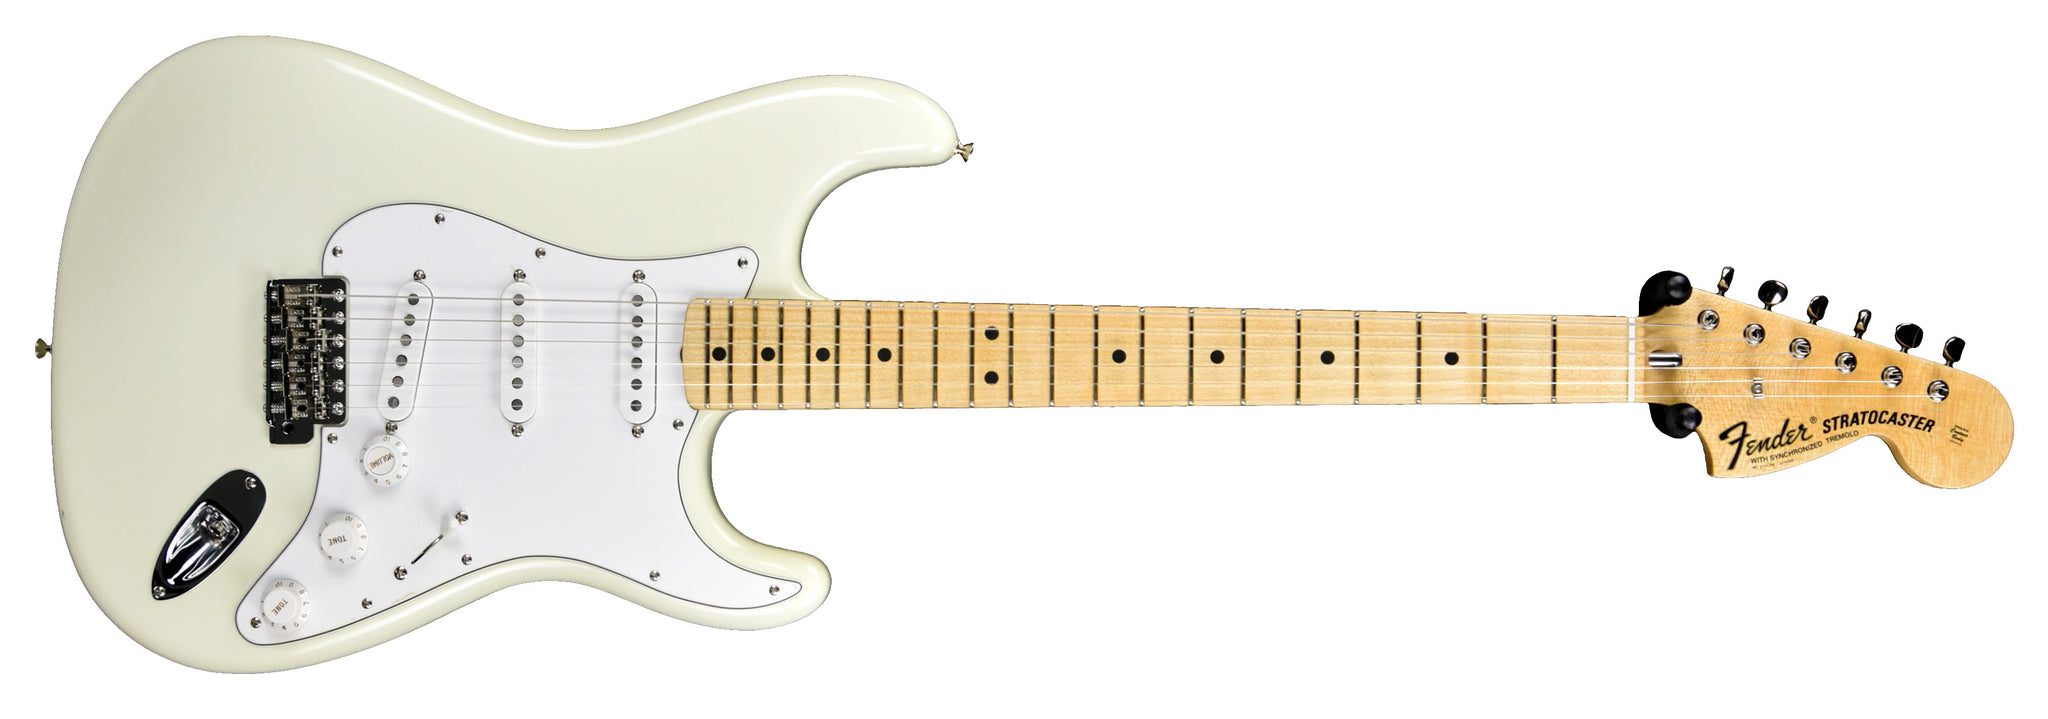 Used 2012 Fender Custom Shop 69 Stratocaster NOS in Olympic White 